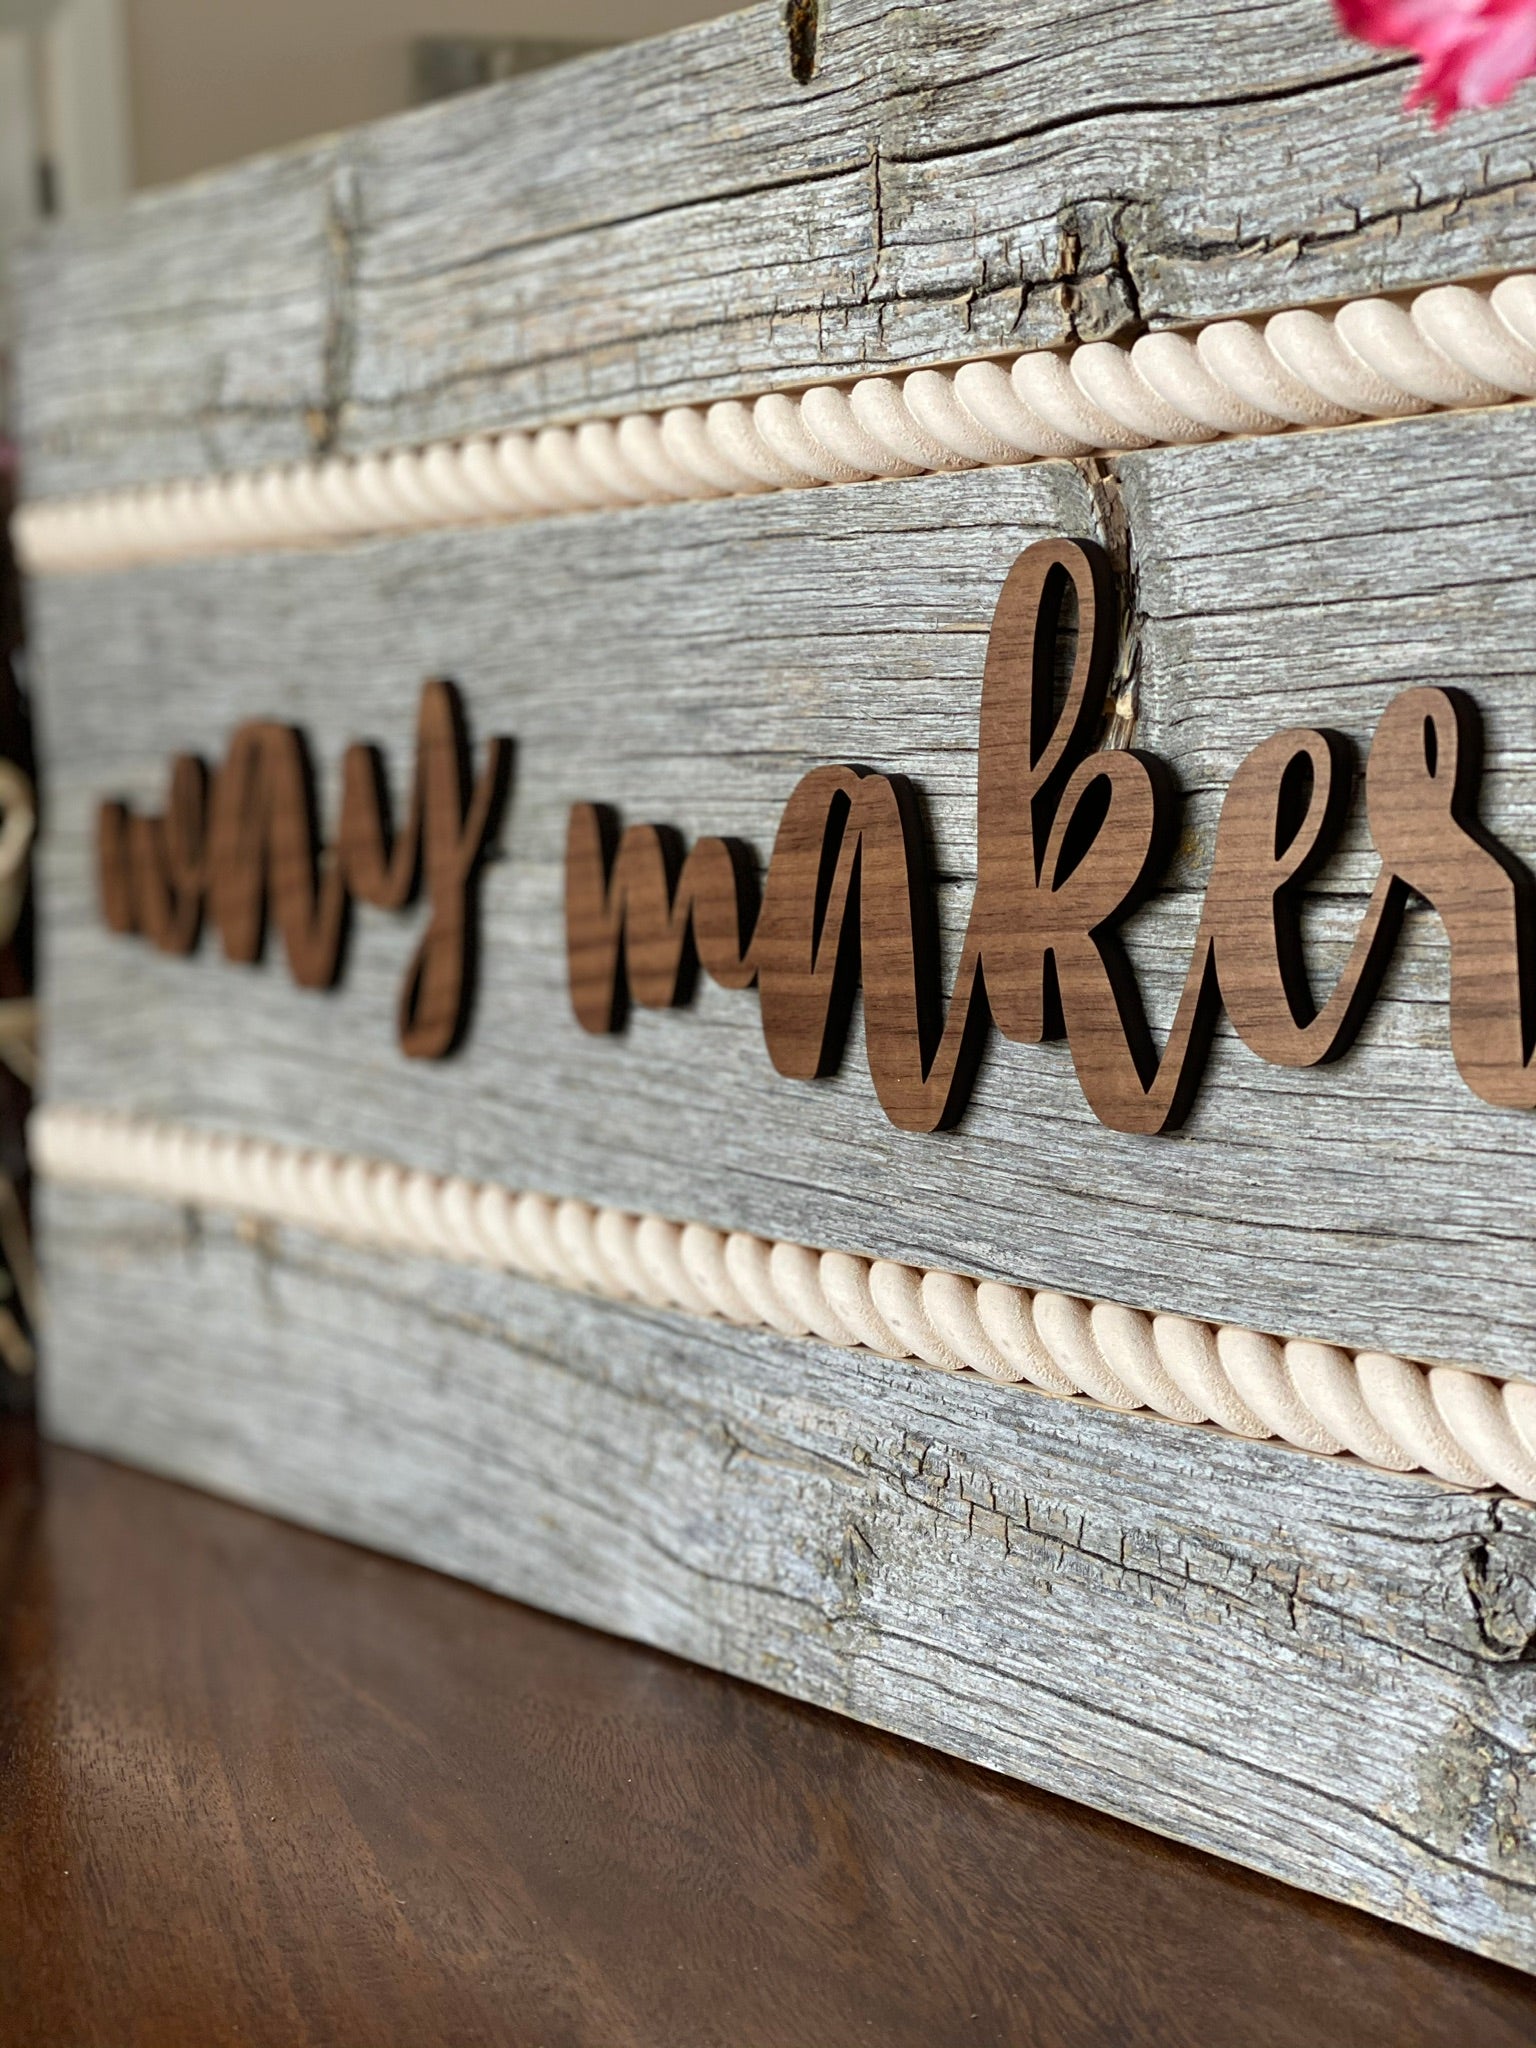 Reclaimed Barn Wood Inspirational Way Maker Sign